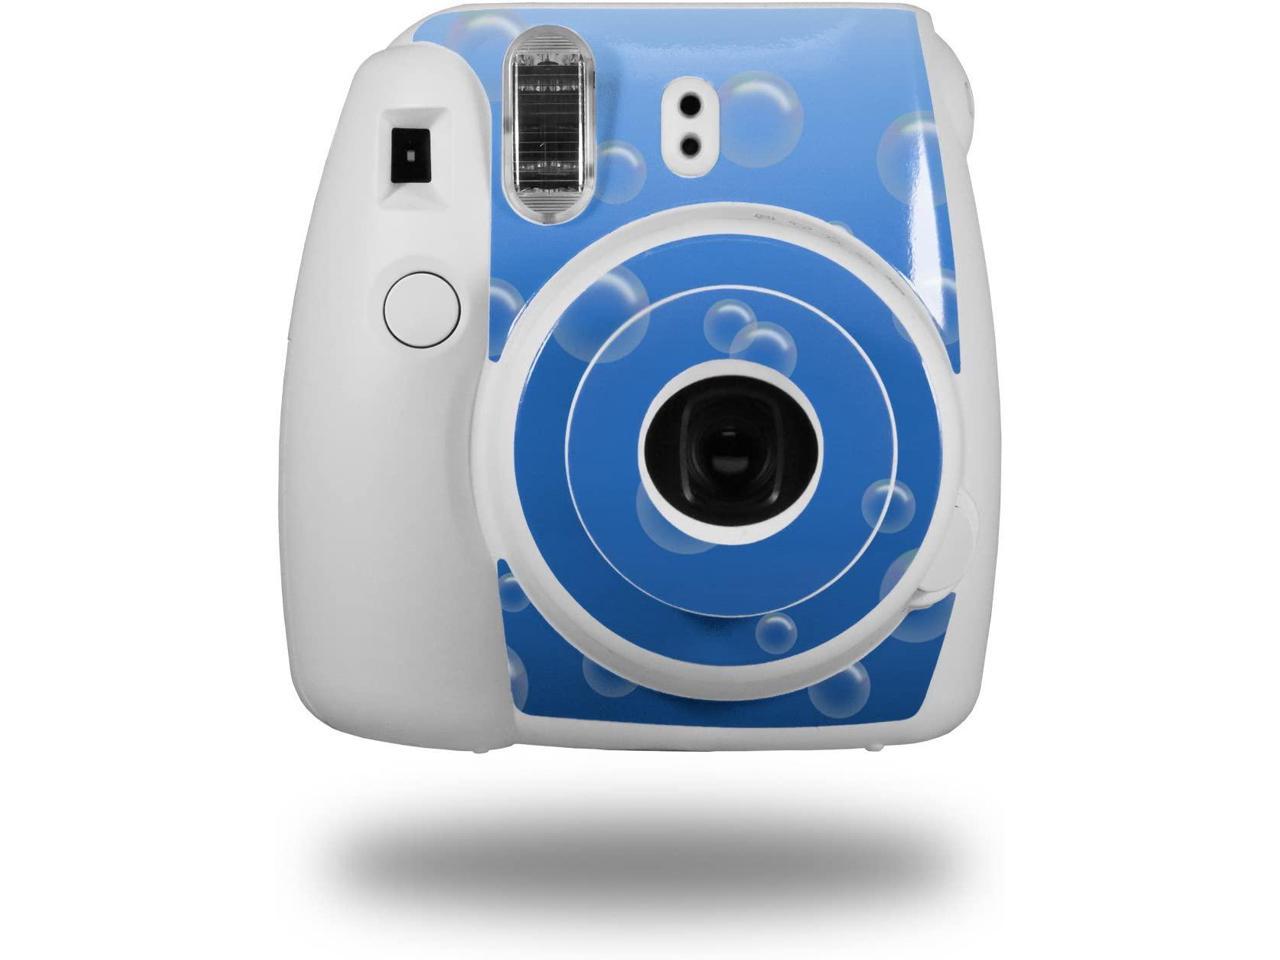 WraptorSkinz Skin Decal Wrap for Fujifilm Instax Mini 8 Camera Bubbles Blue CAMERA NOT INCLUDED